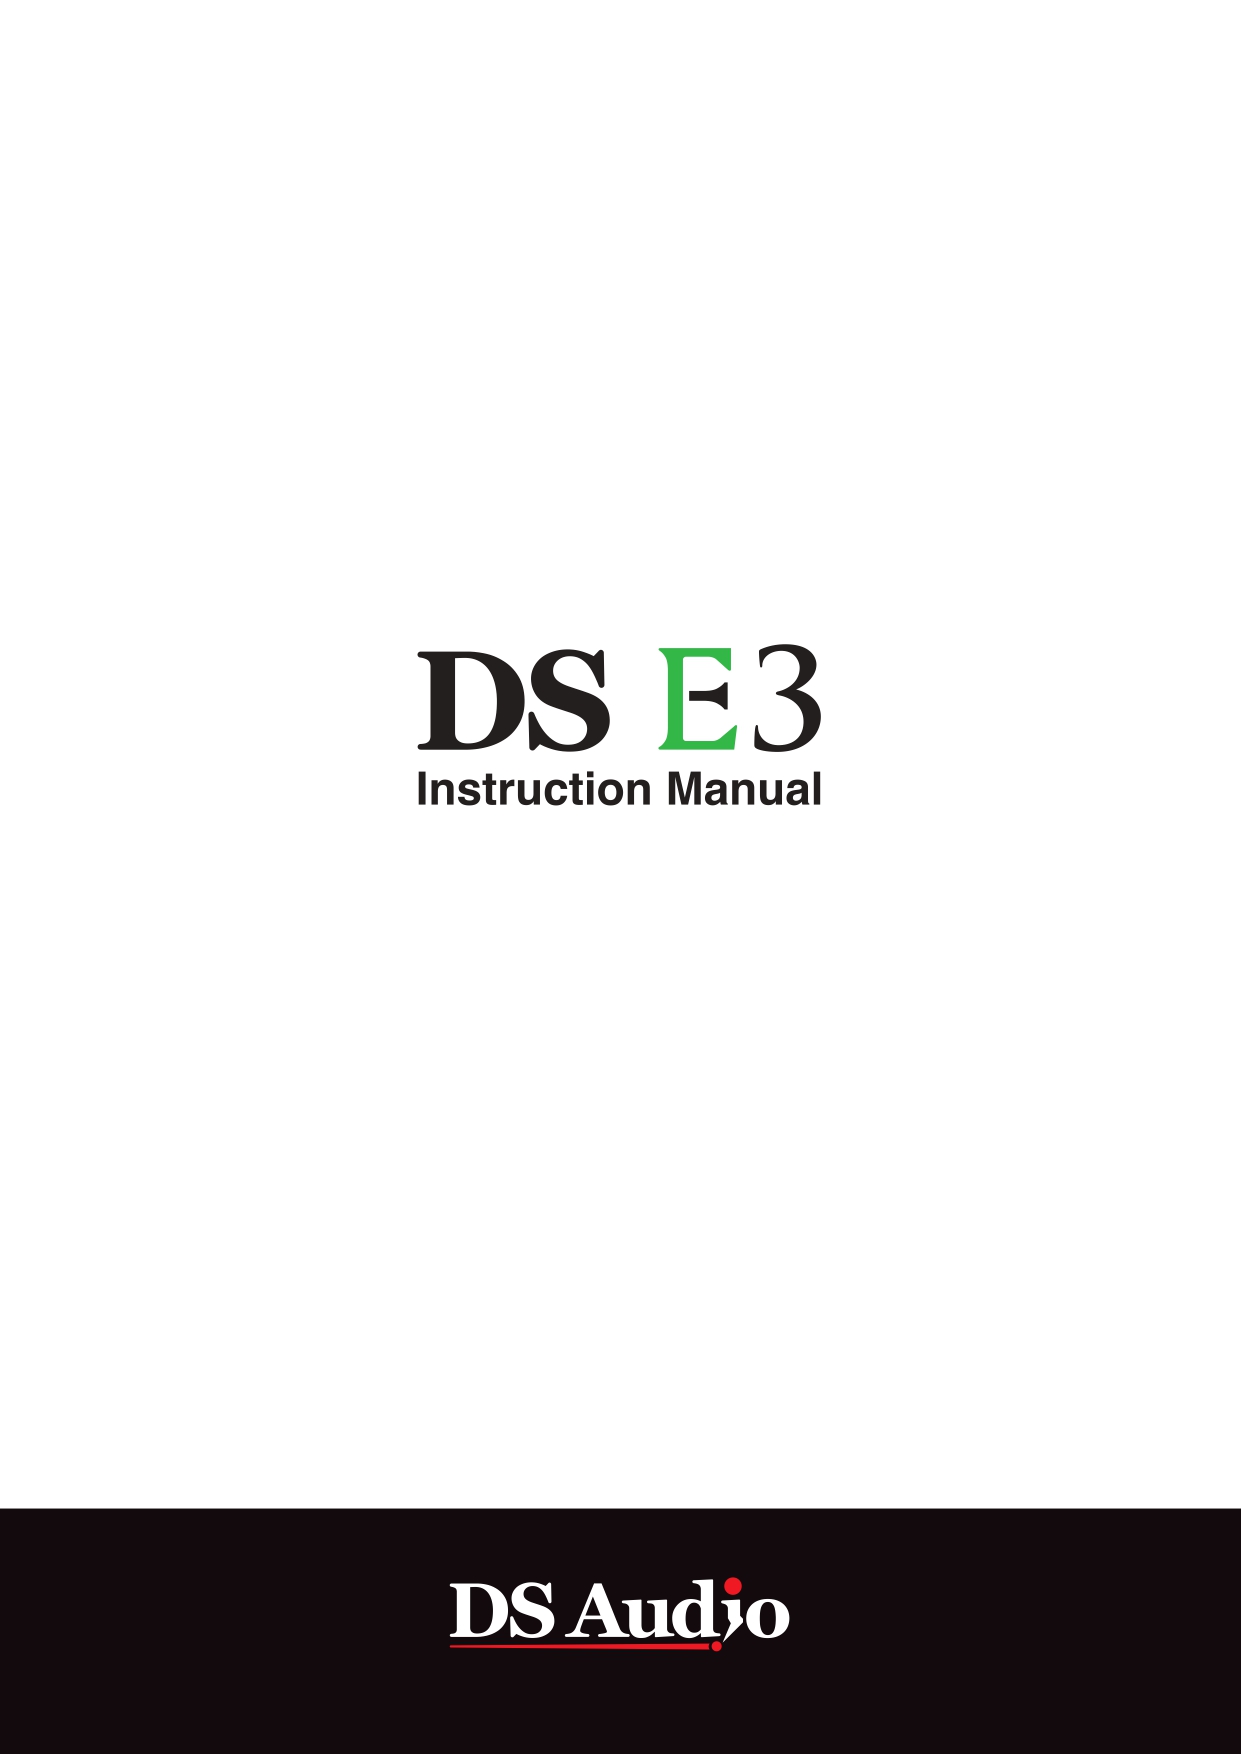 DS-E3 intruction manual